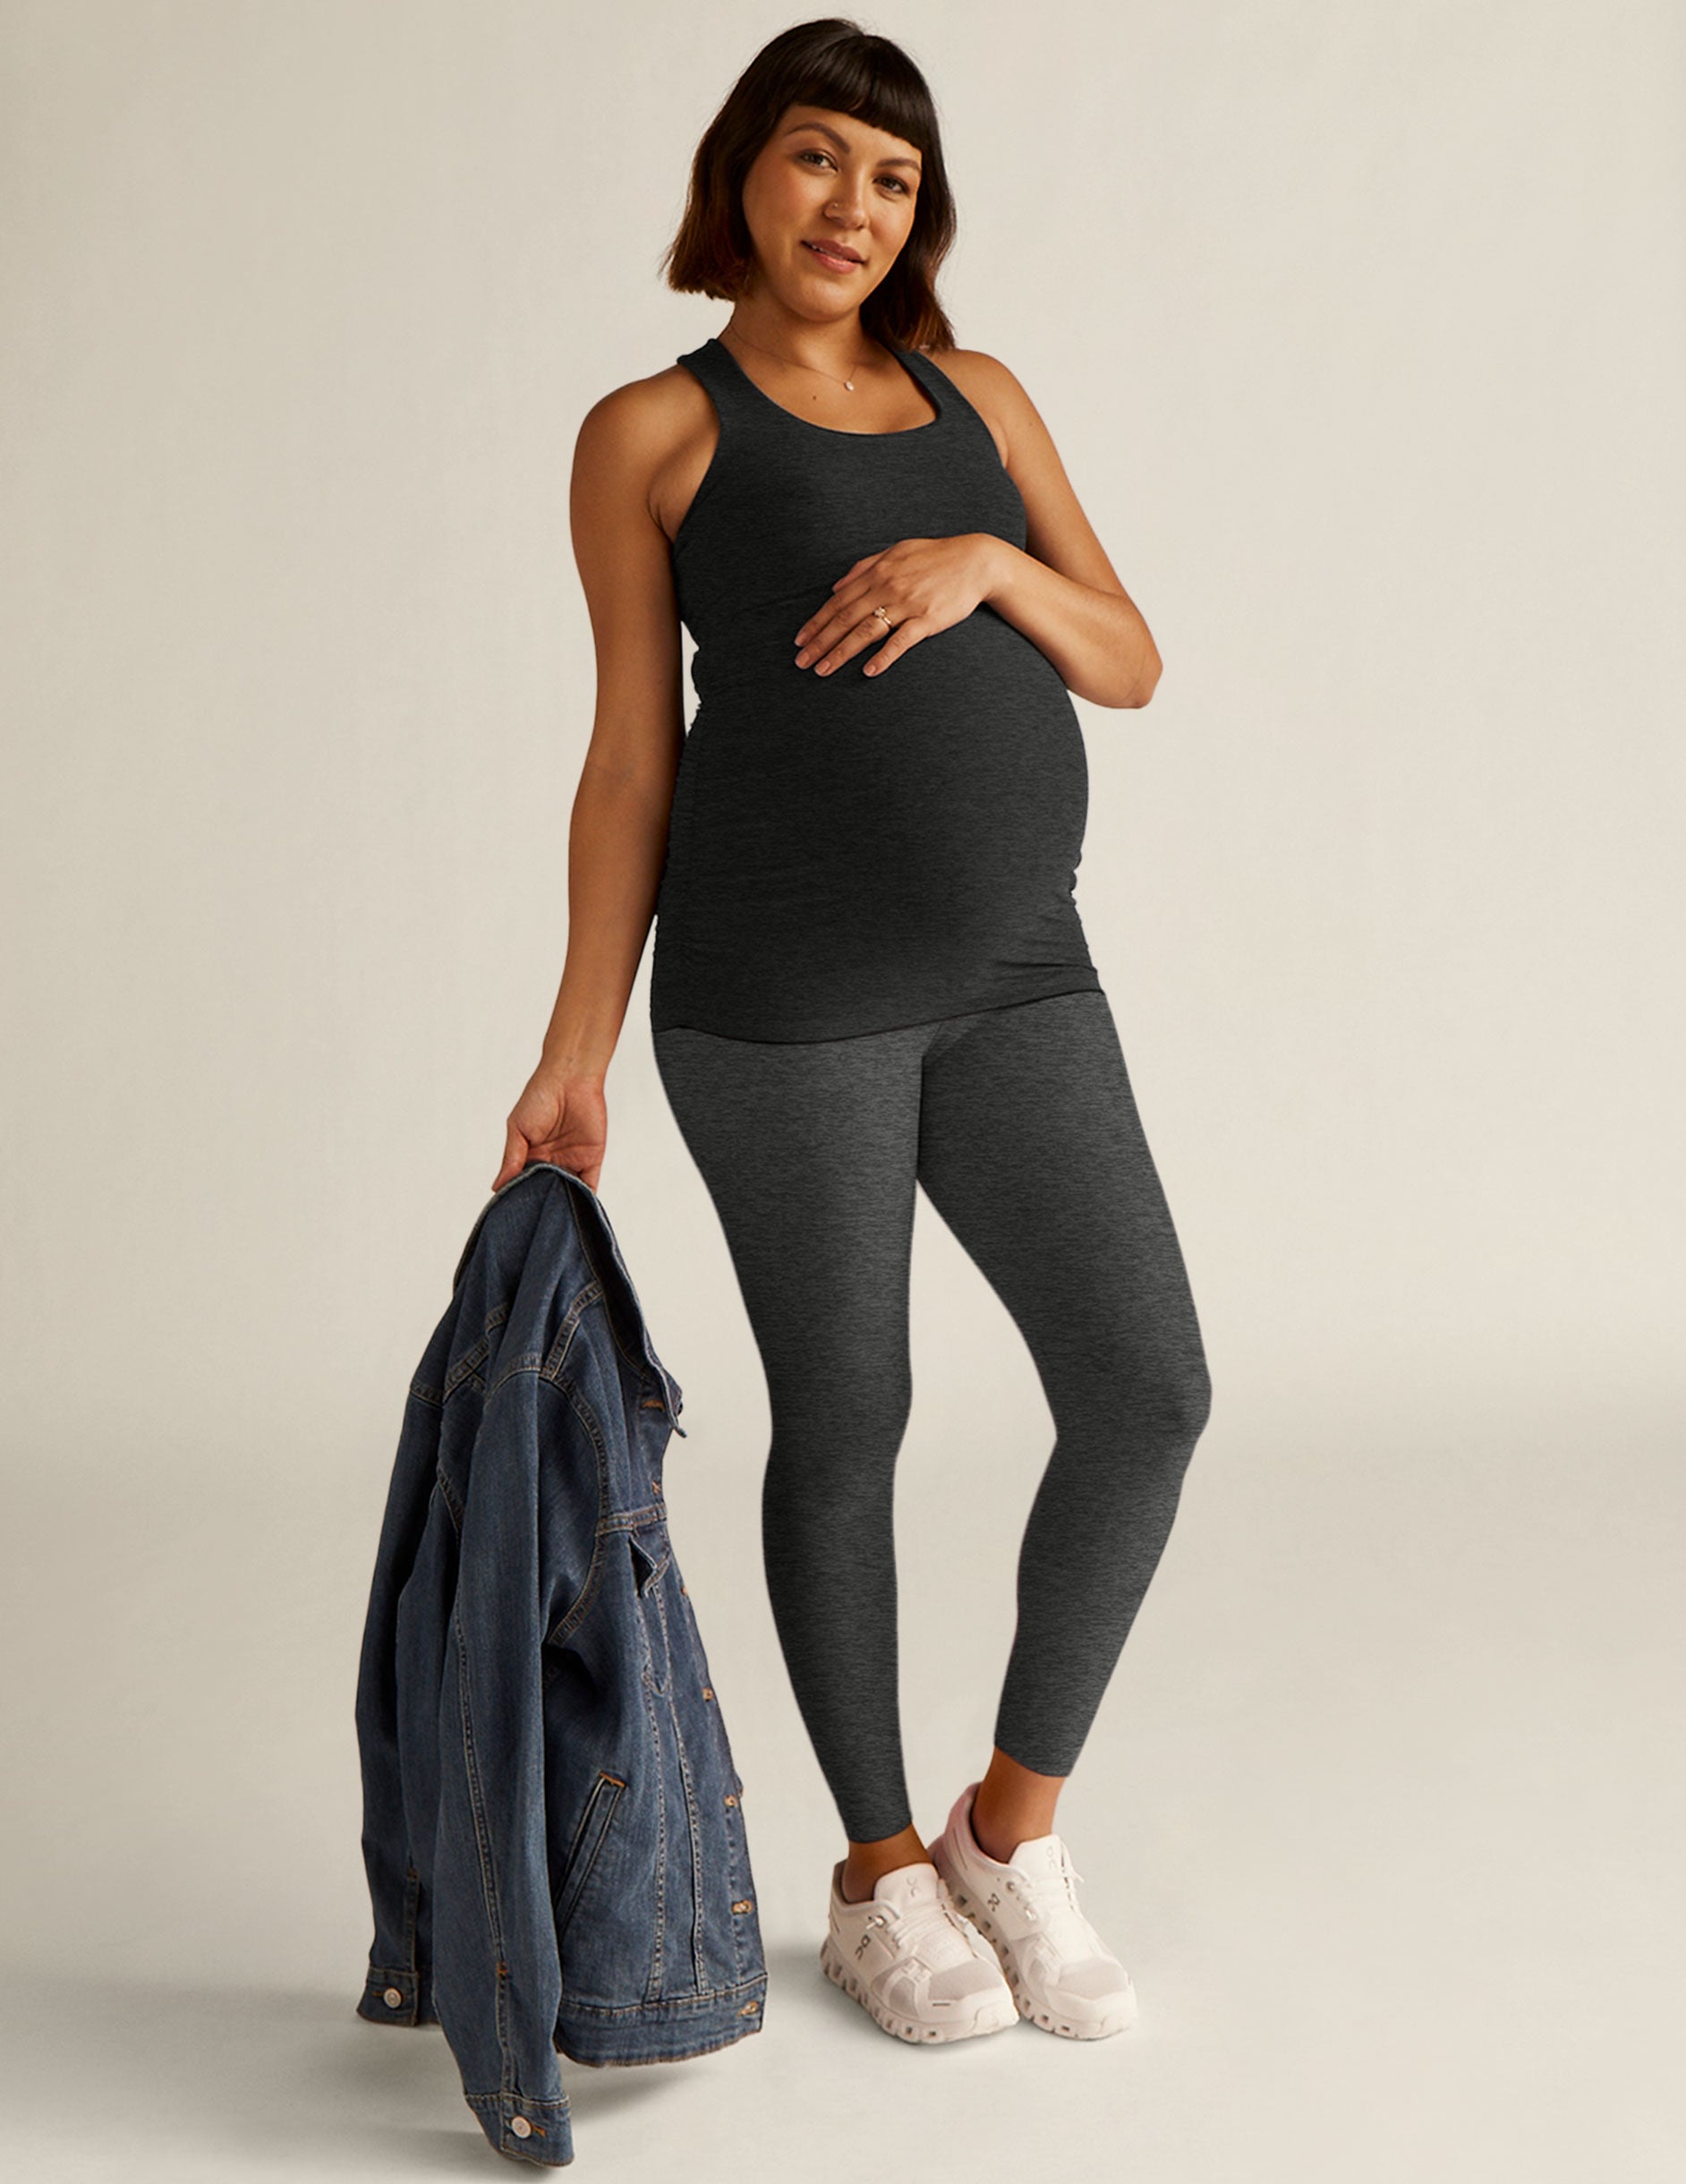 Maternity Leggings: Fashionable Comfort